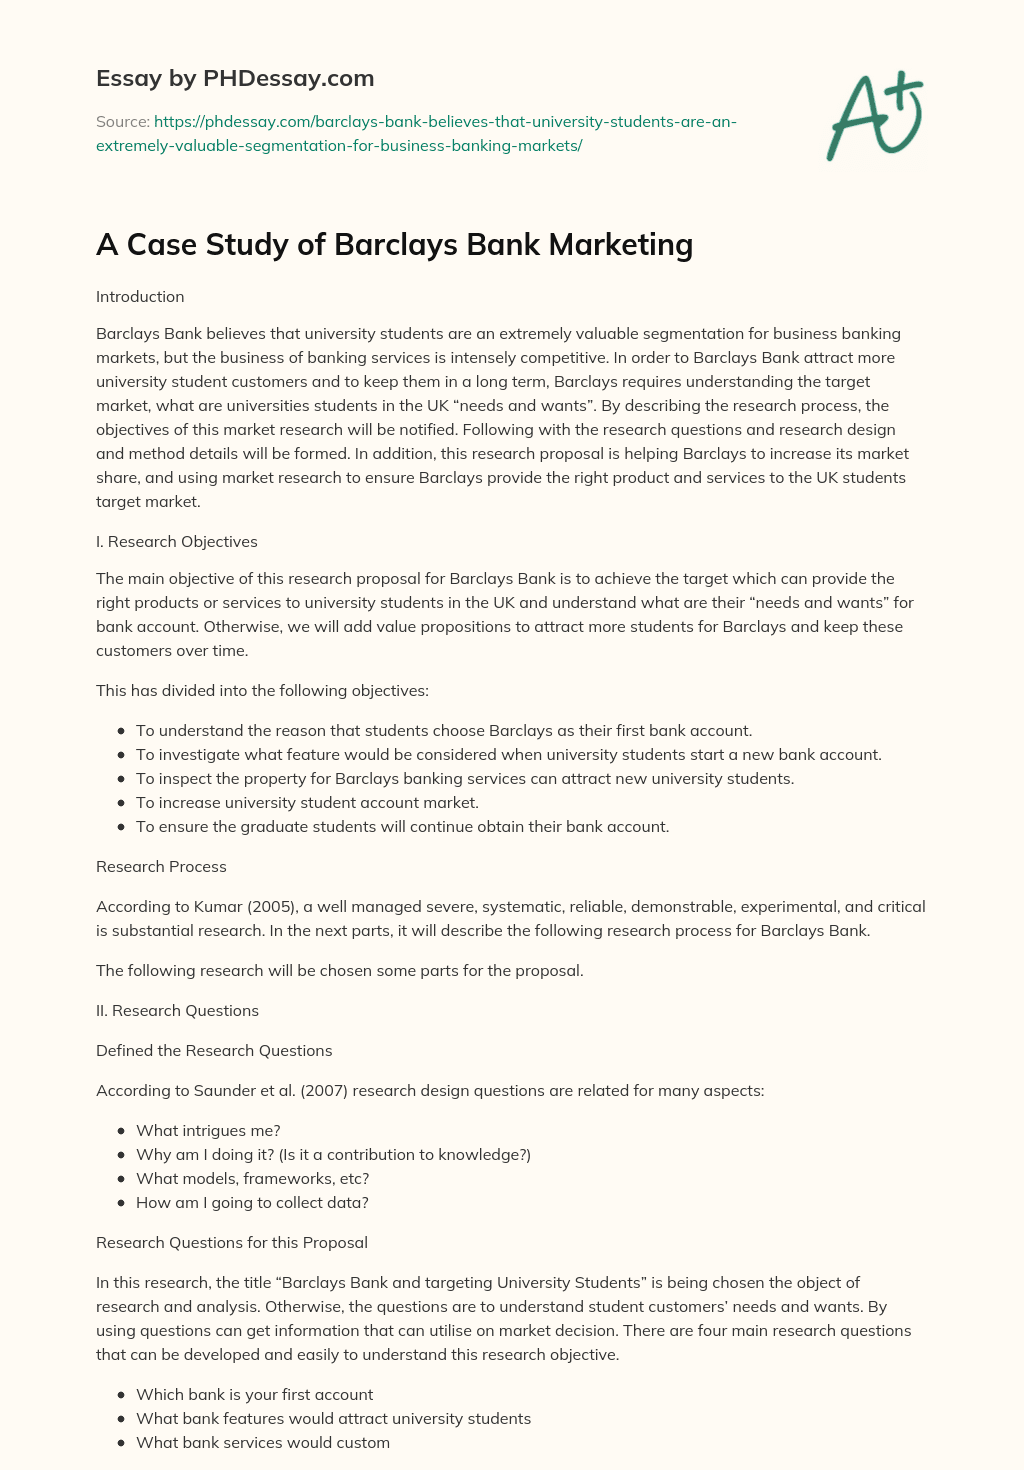 A Case Study of Barclays Bank Marketing essay